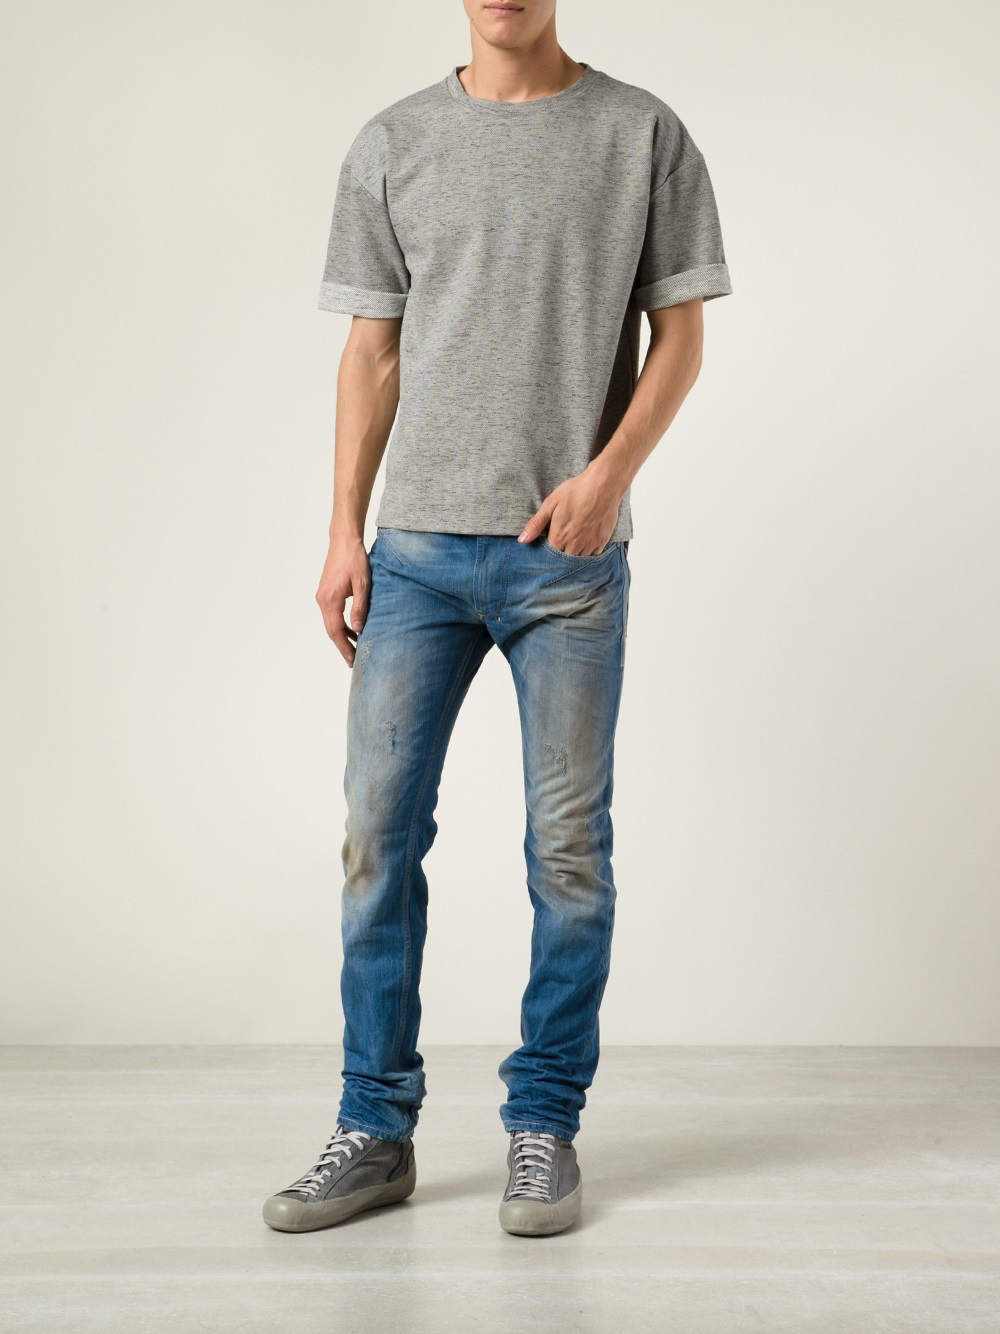 Lyst - Diesel Shioner Slim Skinny Jean in Blue for Men